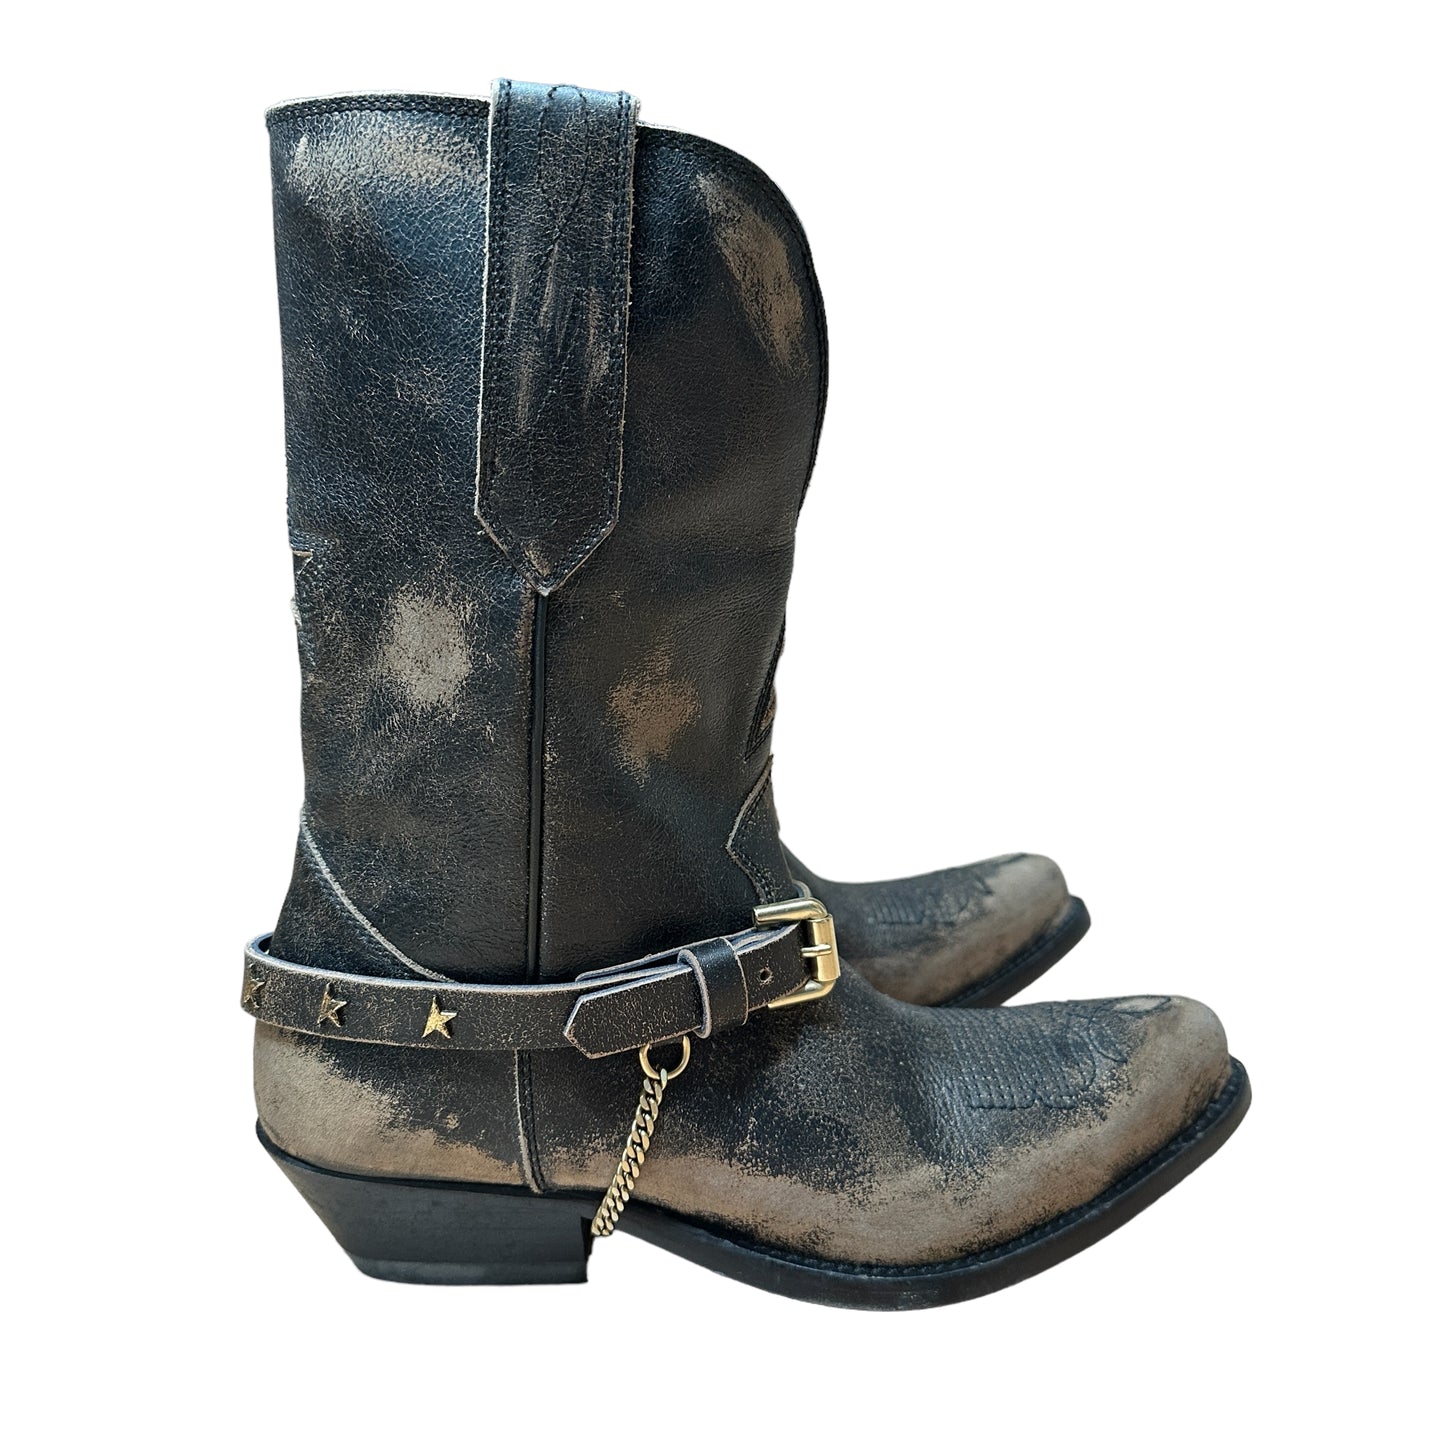 Cowboy Black and Tan Boots - 7